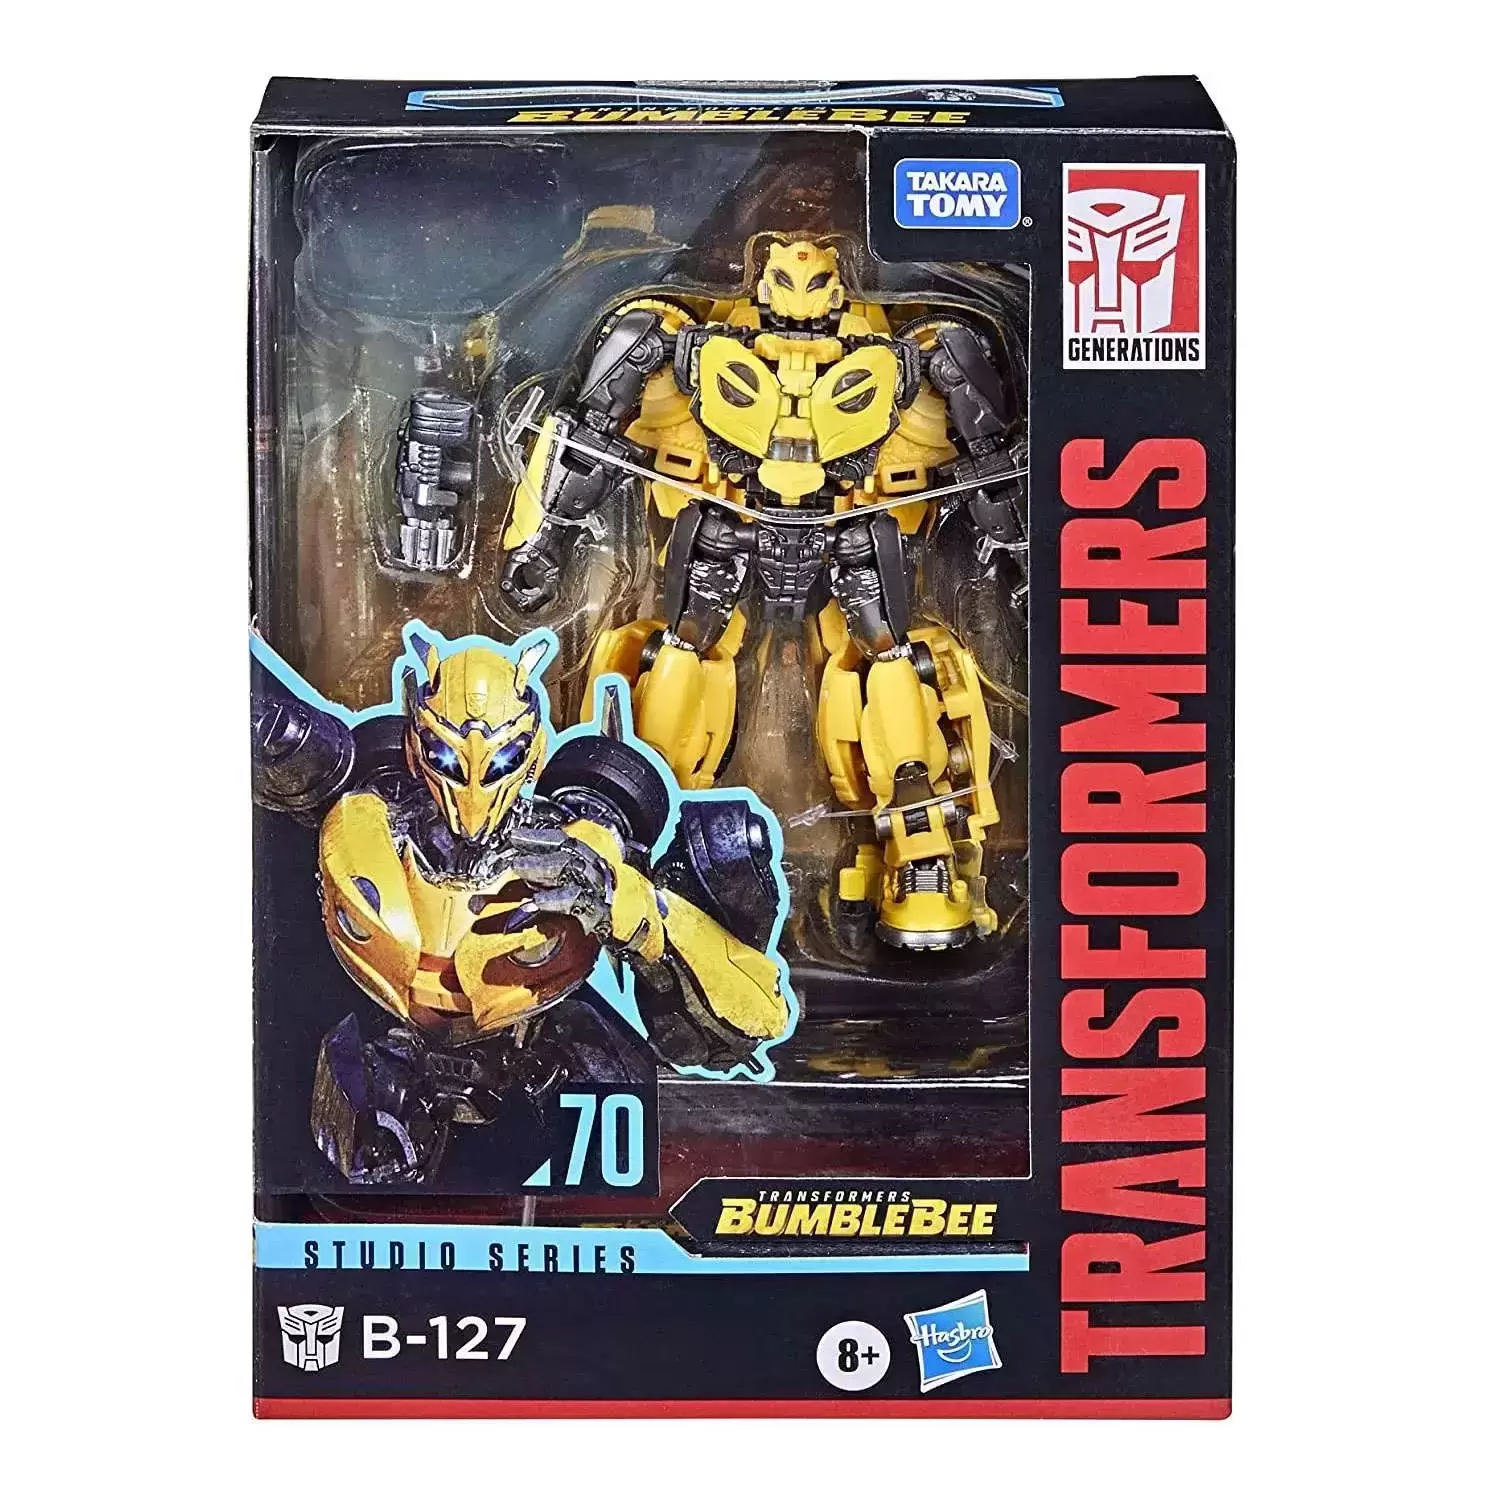 Transformers Studio Series - B-127